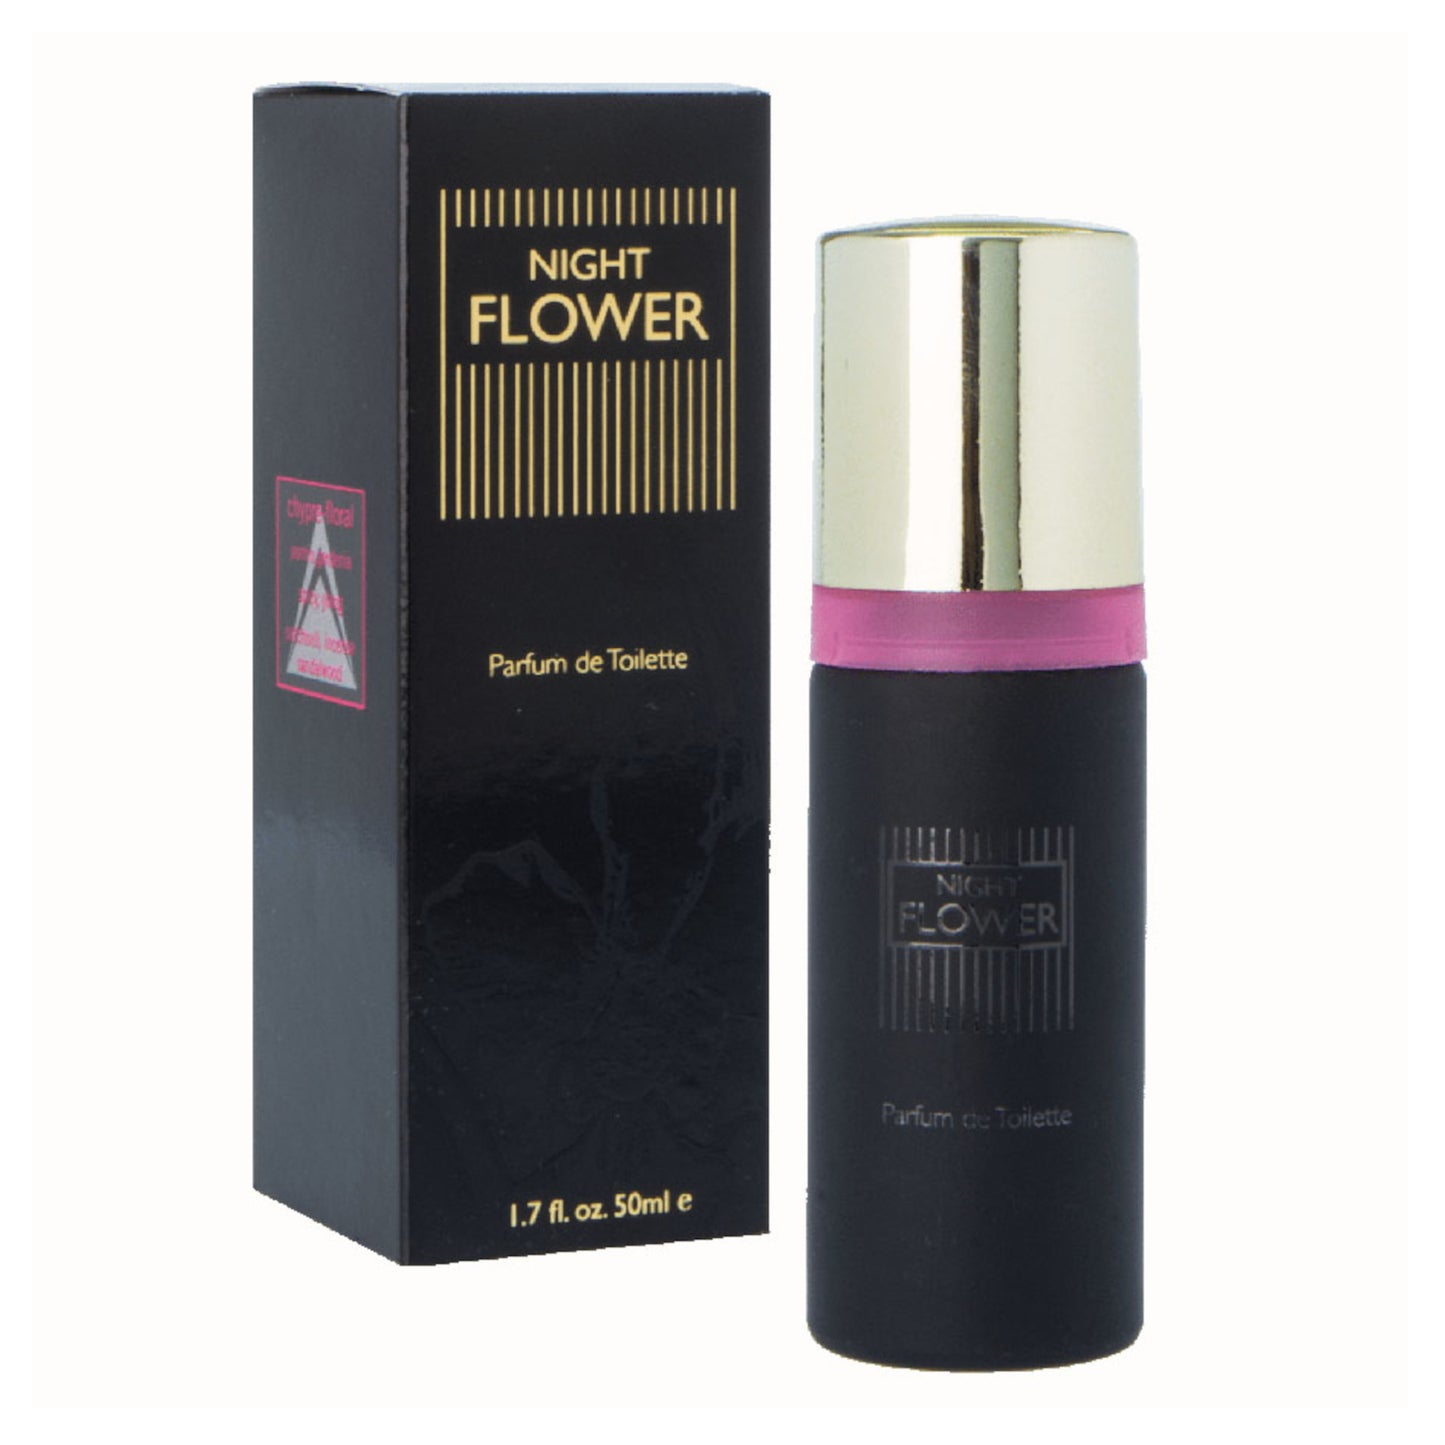 Milton Lloyd Night Flower 50ml Parfum De Toilette